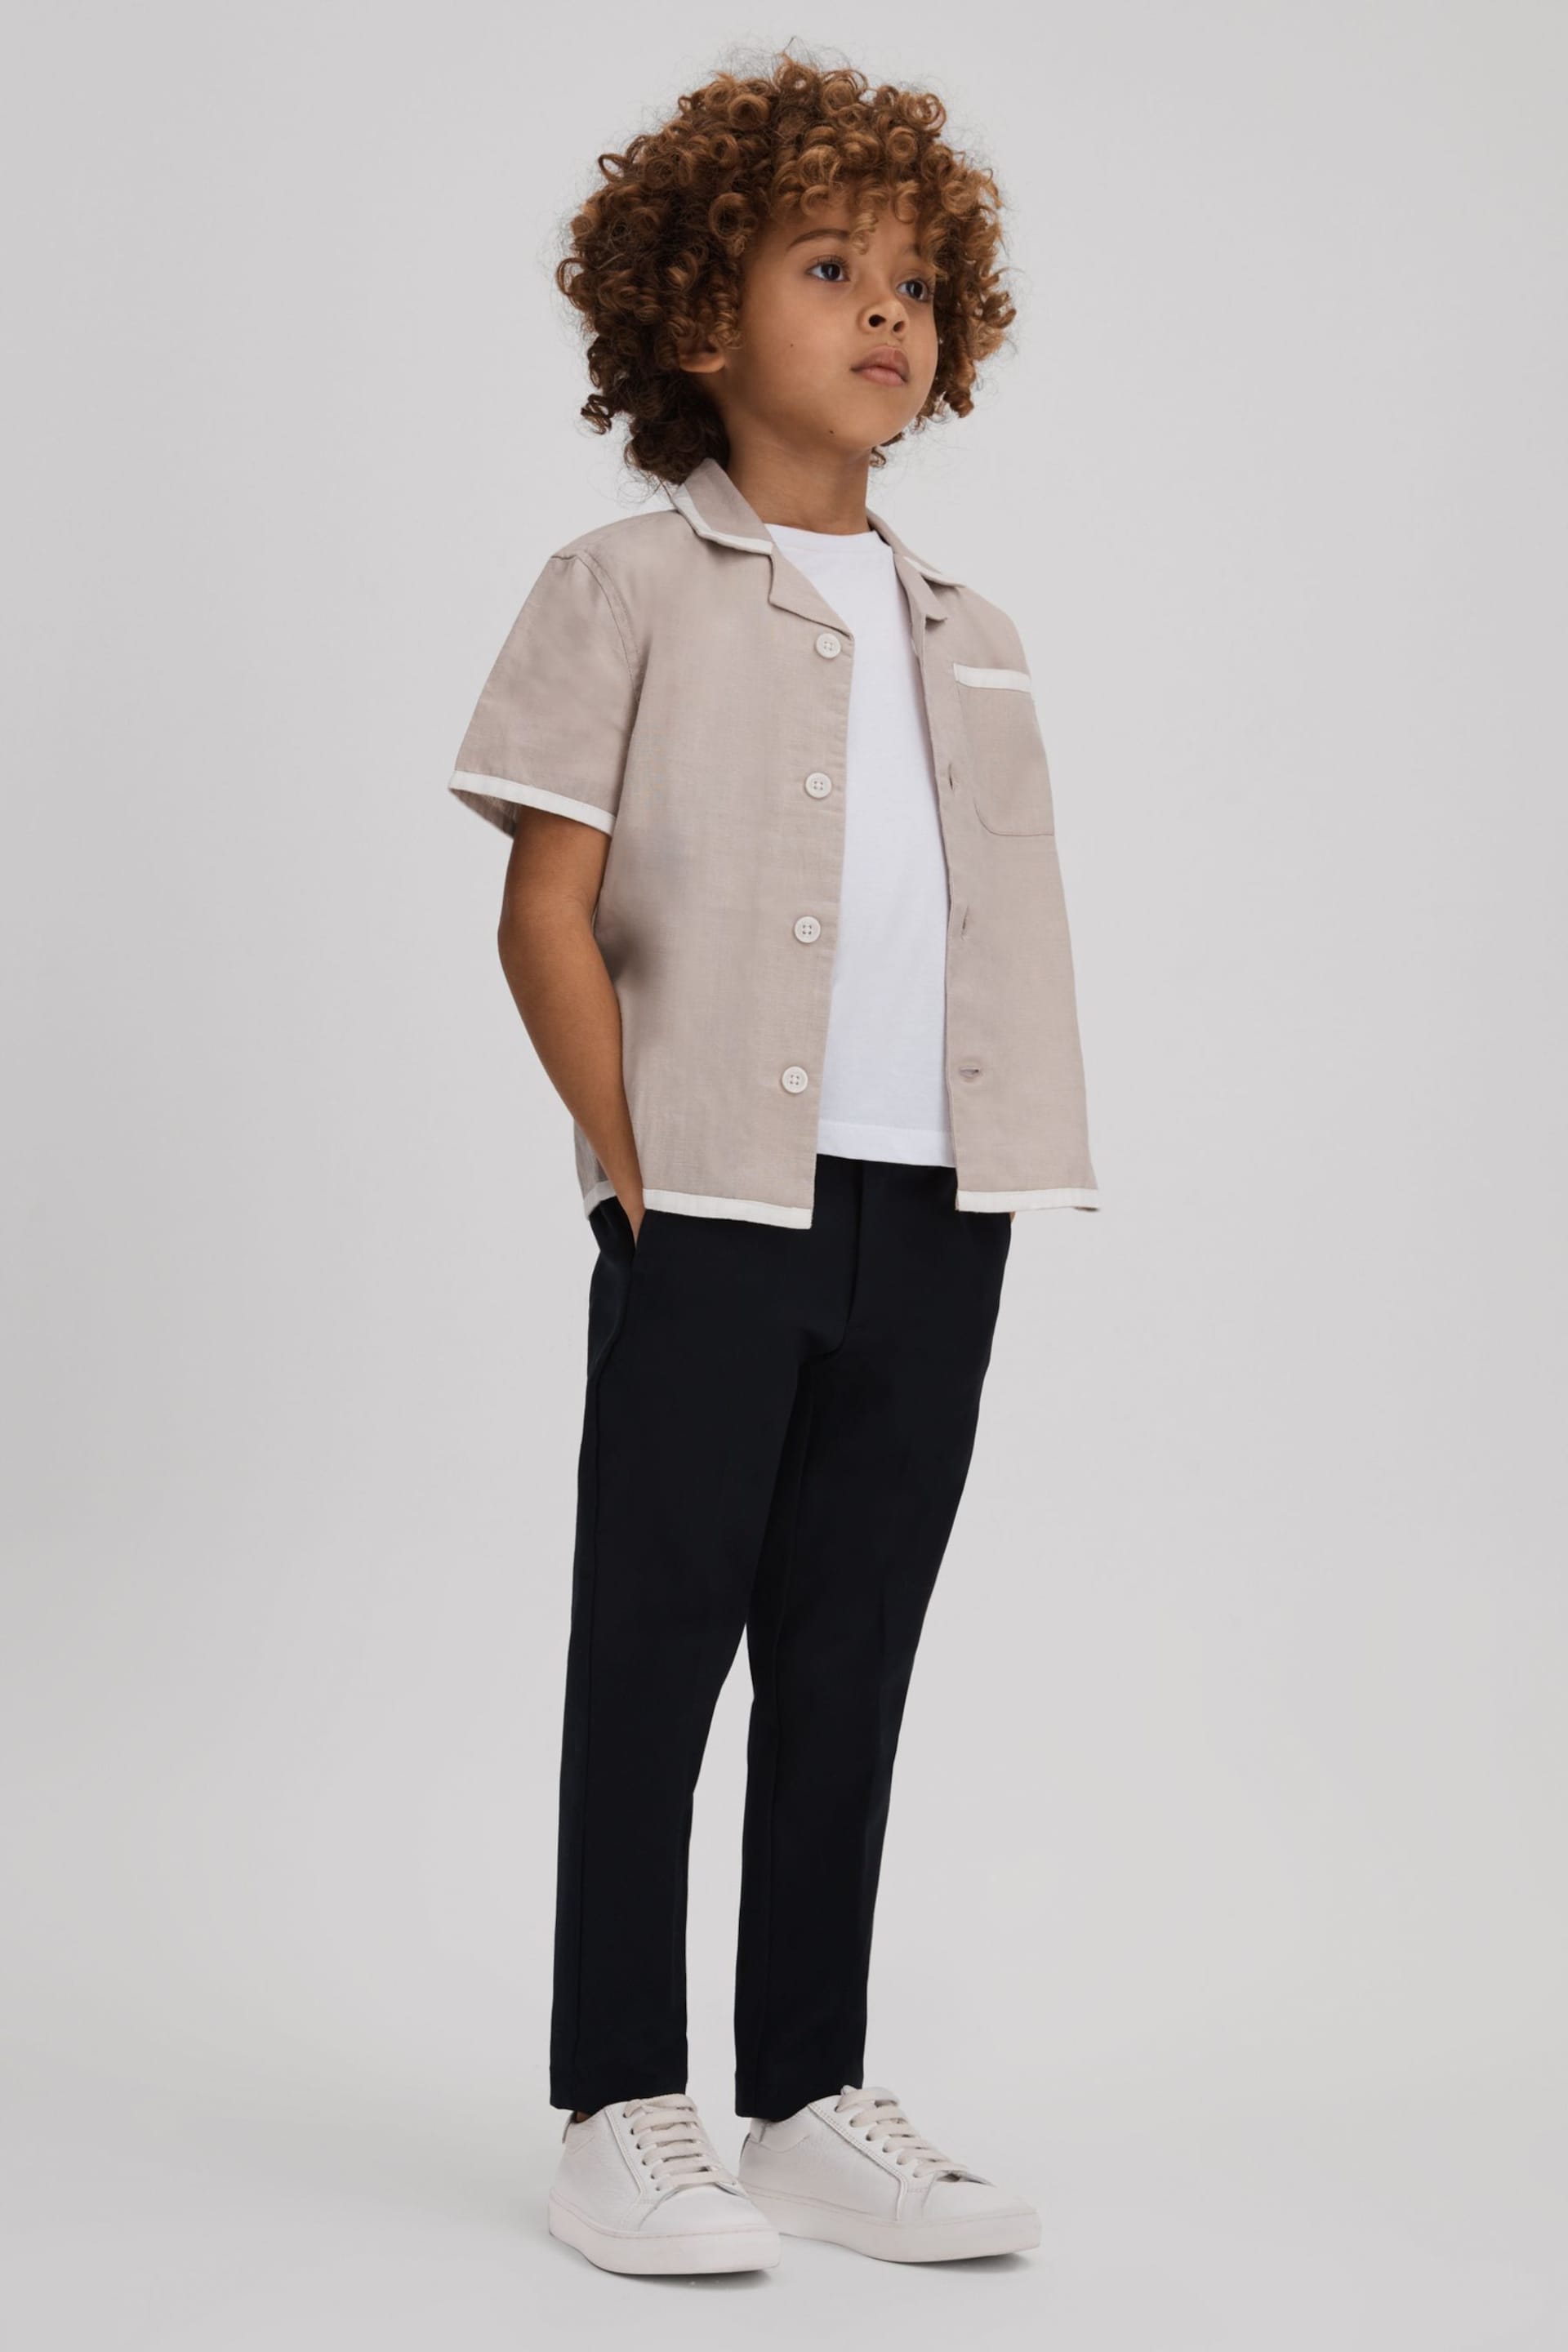 Reiss Stone/White Vitan Linen Contrast Cuban Collar Shirt - Image 3 of 4